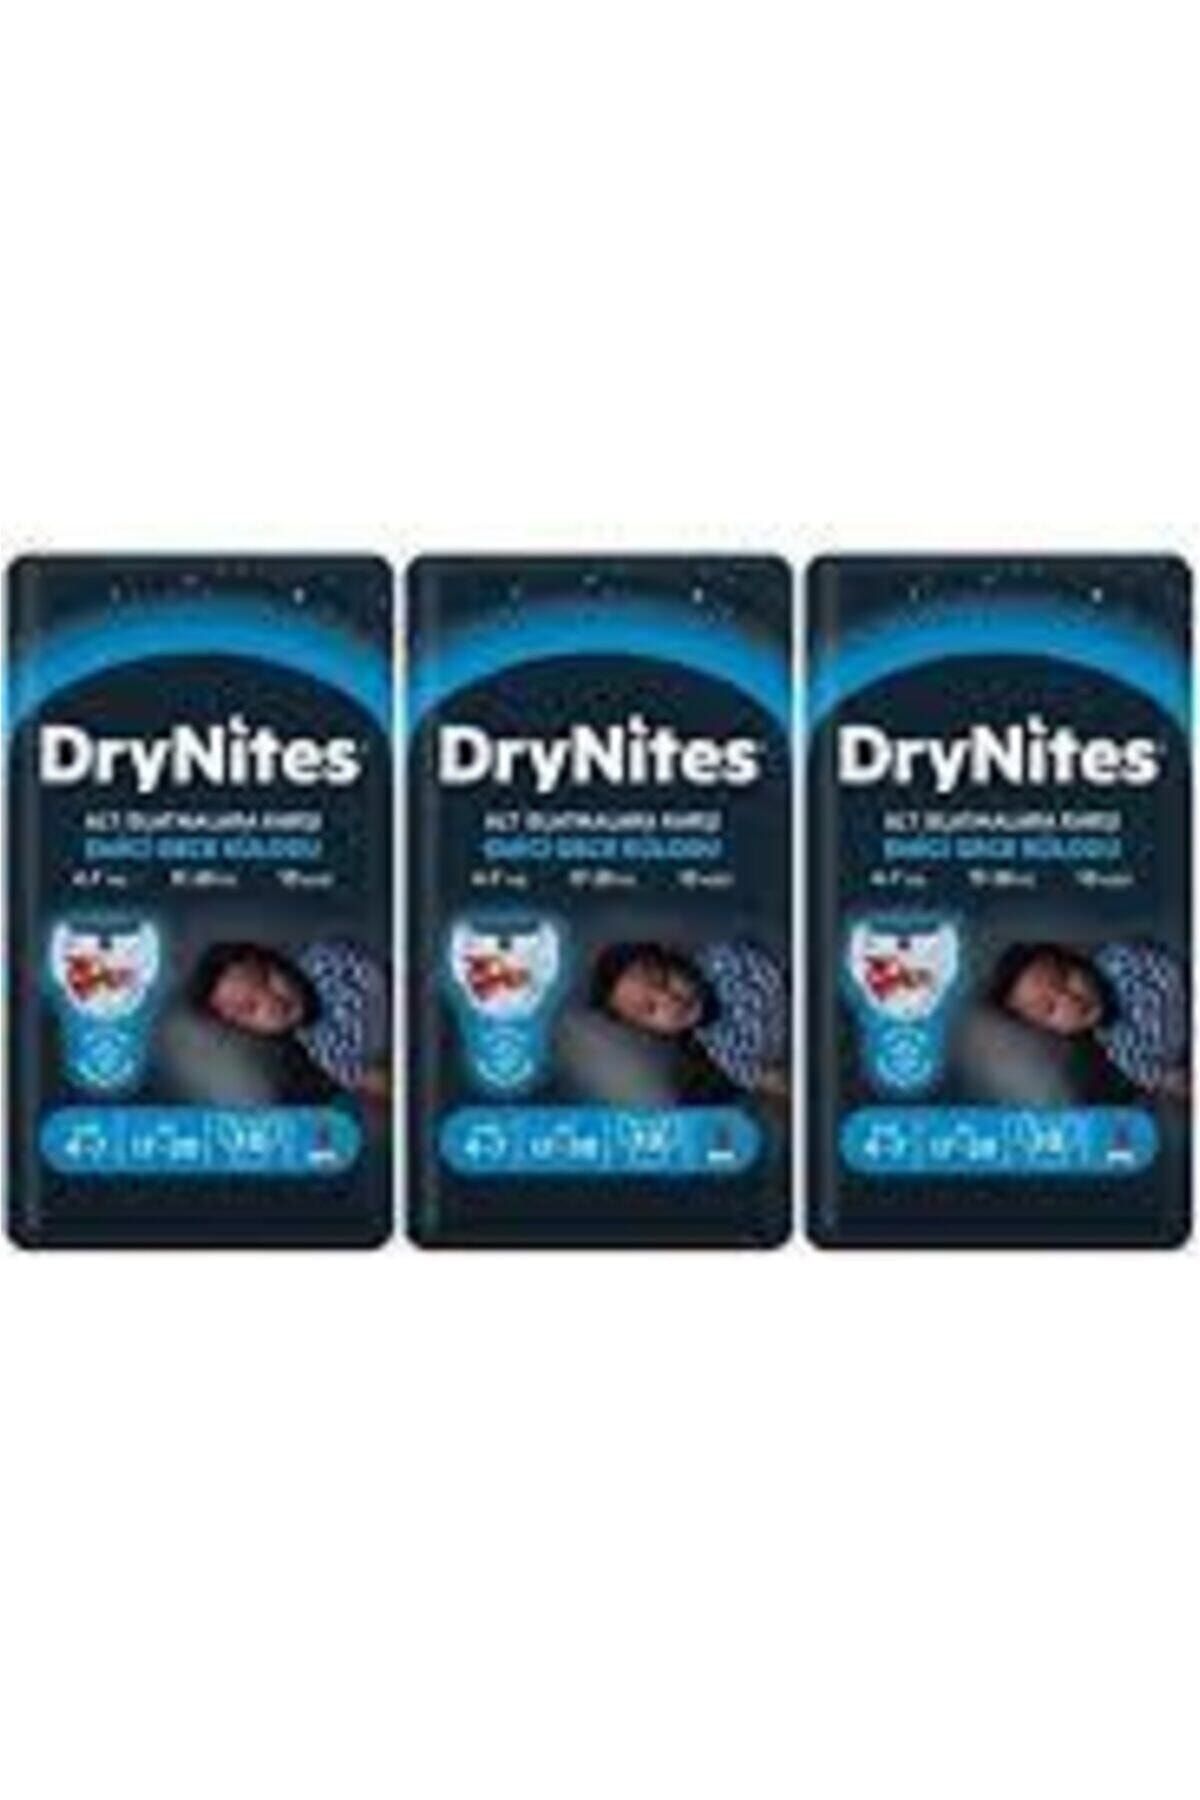 DryNites Erkek Emici Gece Külodu 4-7 Yaş 3paket * 30adet